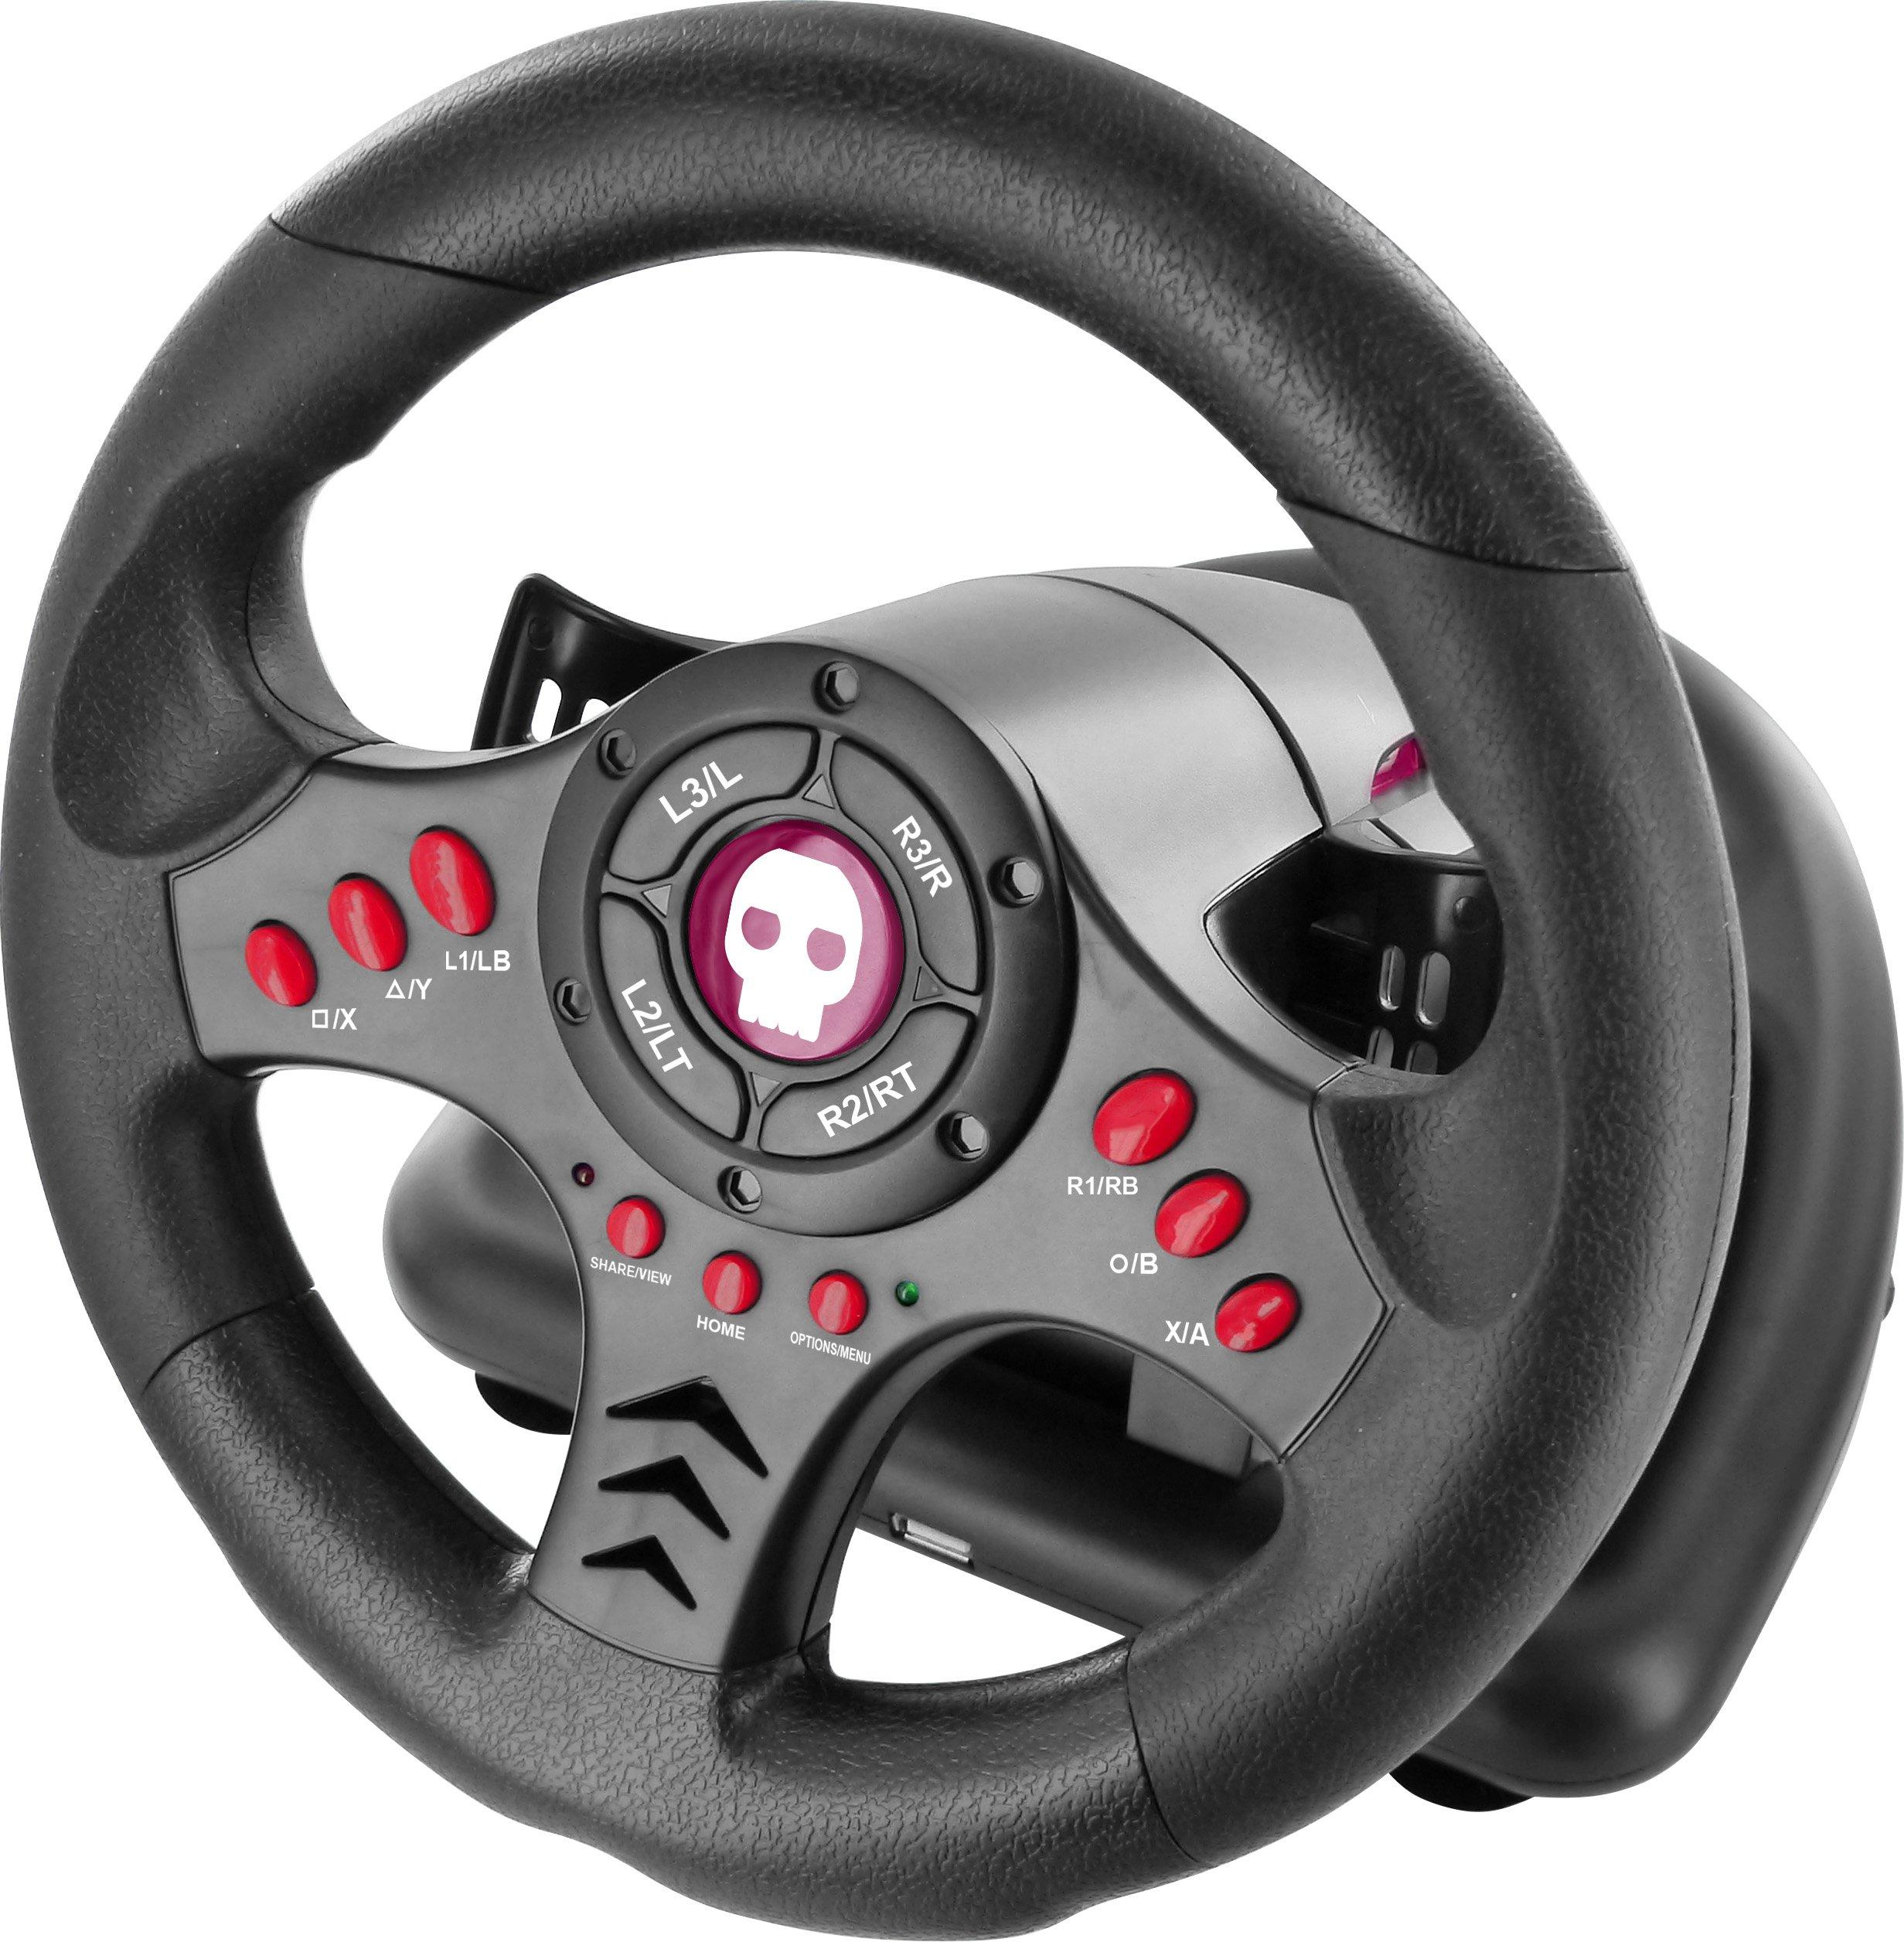 list item 2 of 5 Multi-Format Steering Wheel and Pedals GameStop Exclusive